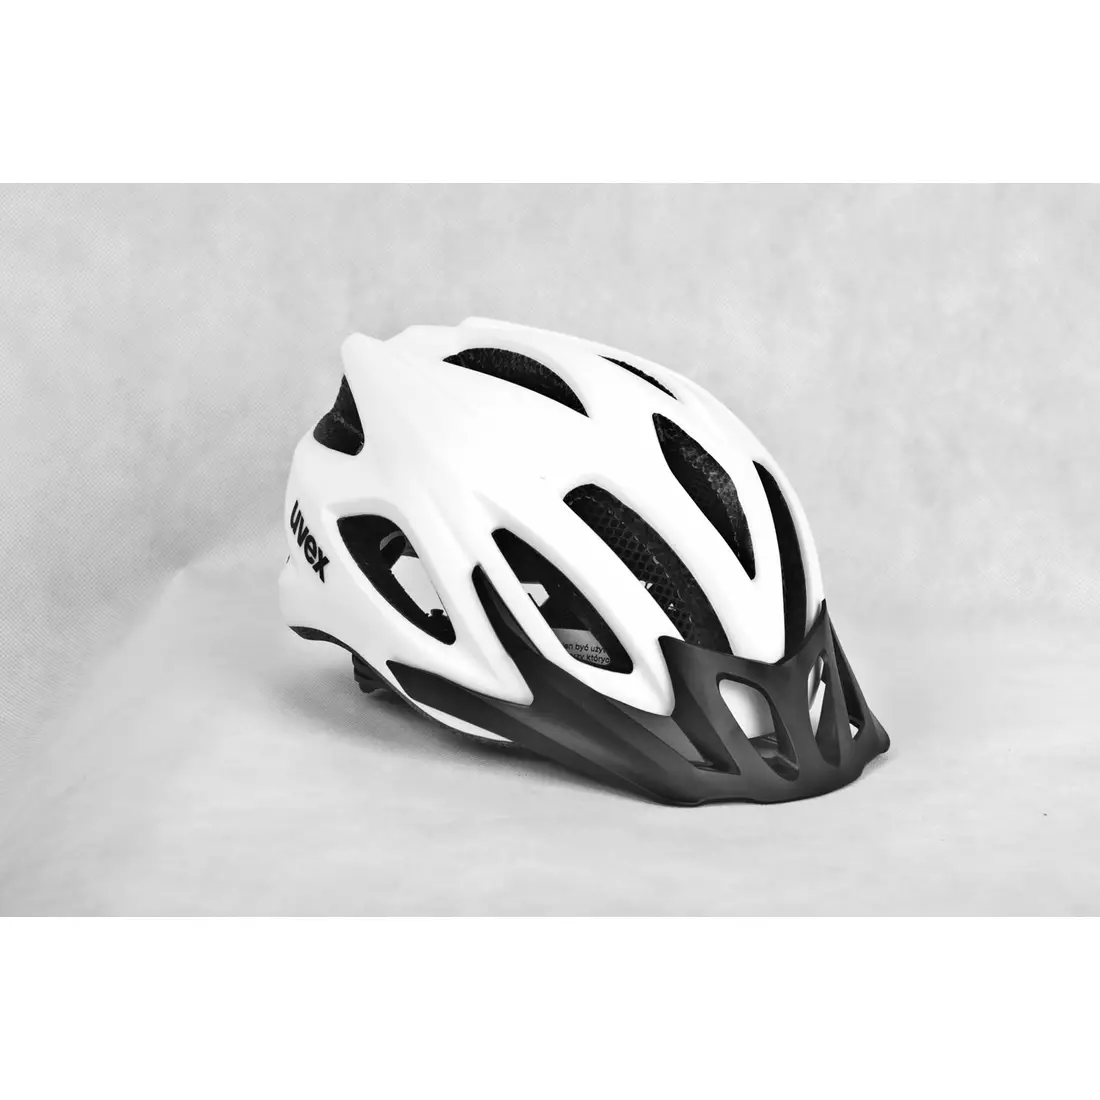 UVEX VIVA 2 bicycle helmet 410104mat03 white mat